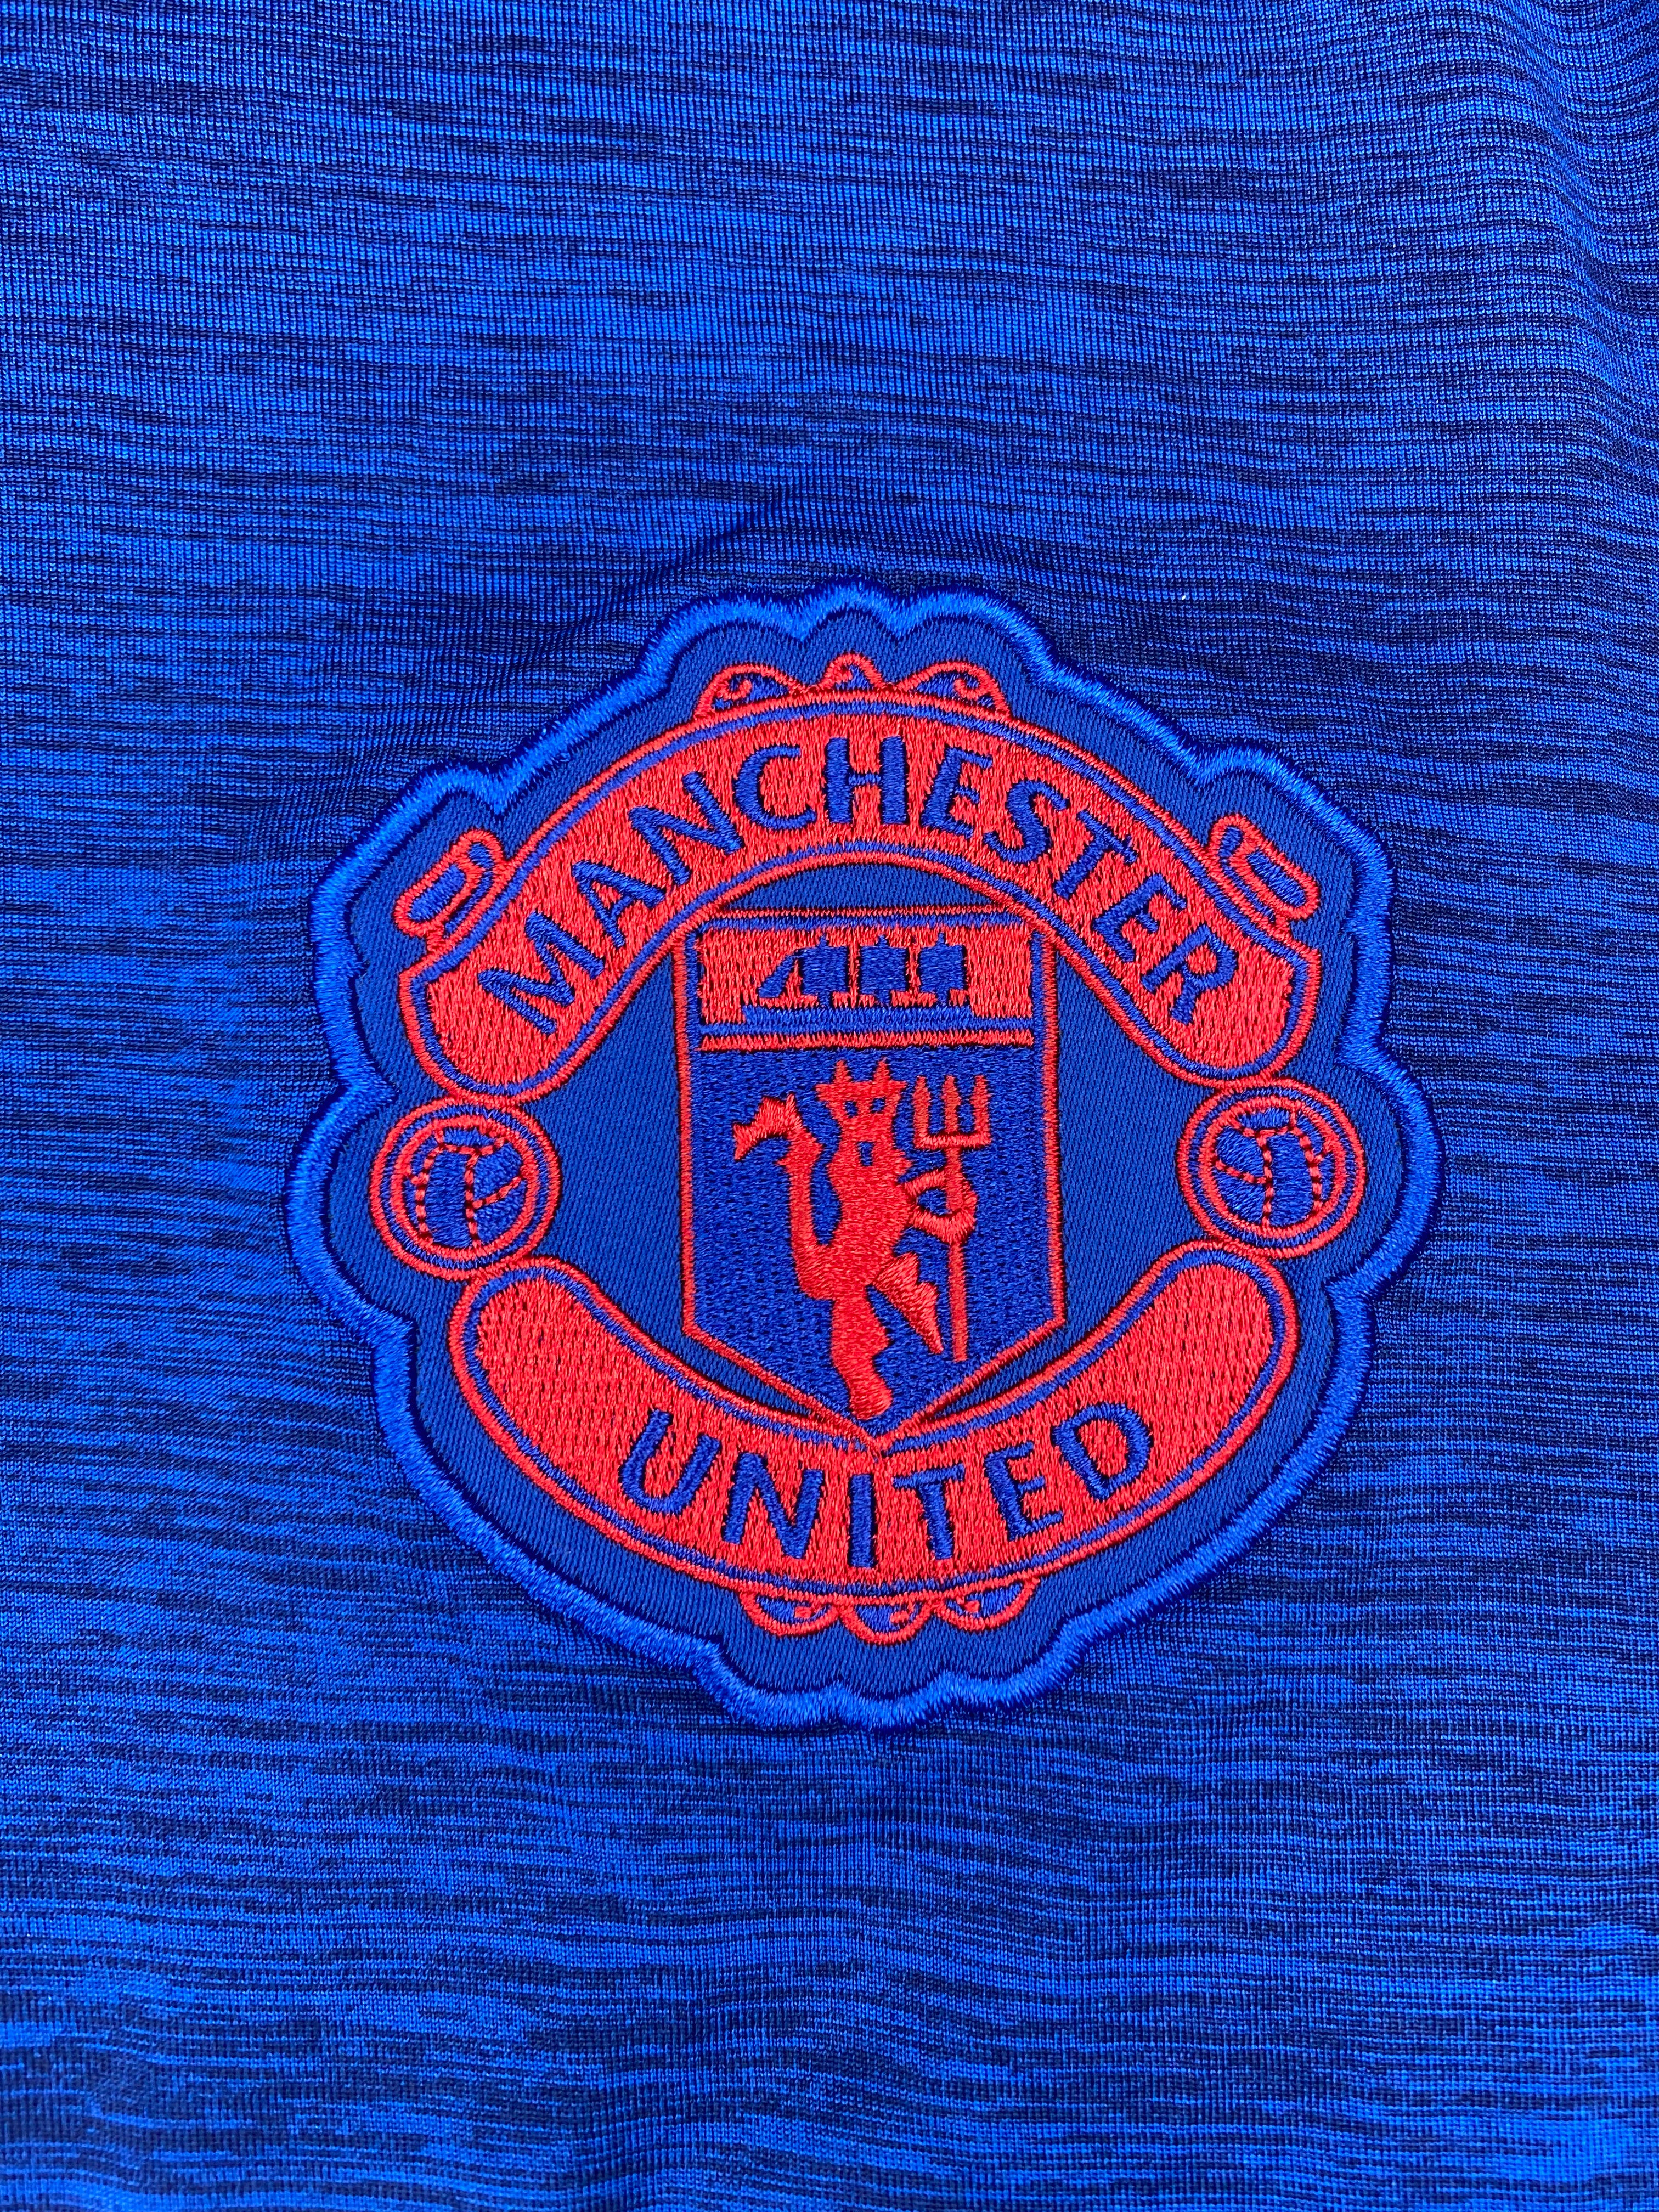 2016/17 Manchester United L/S Away Shirt (XL) BNWT